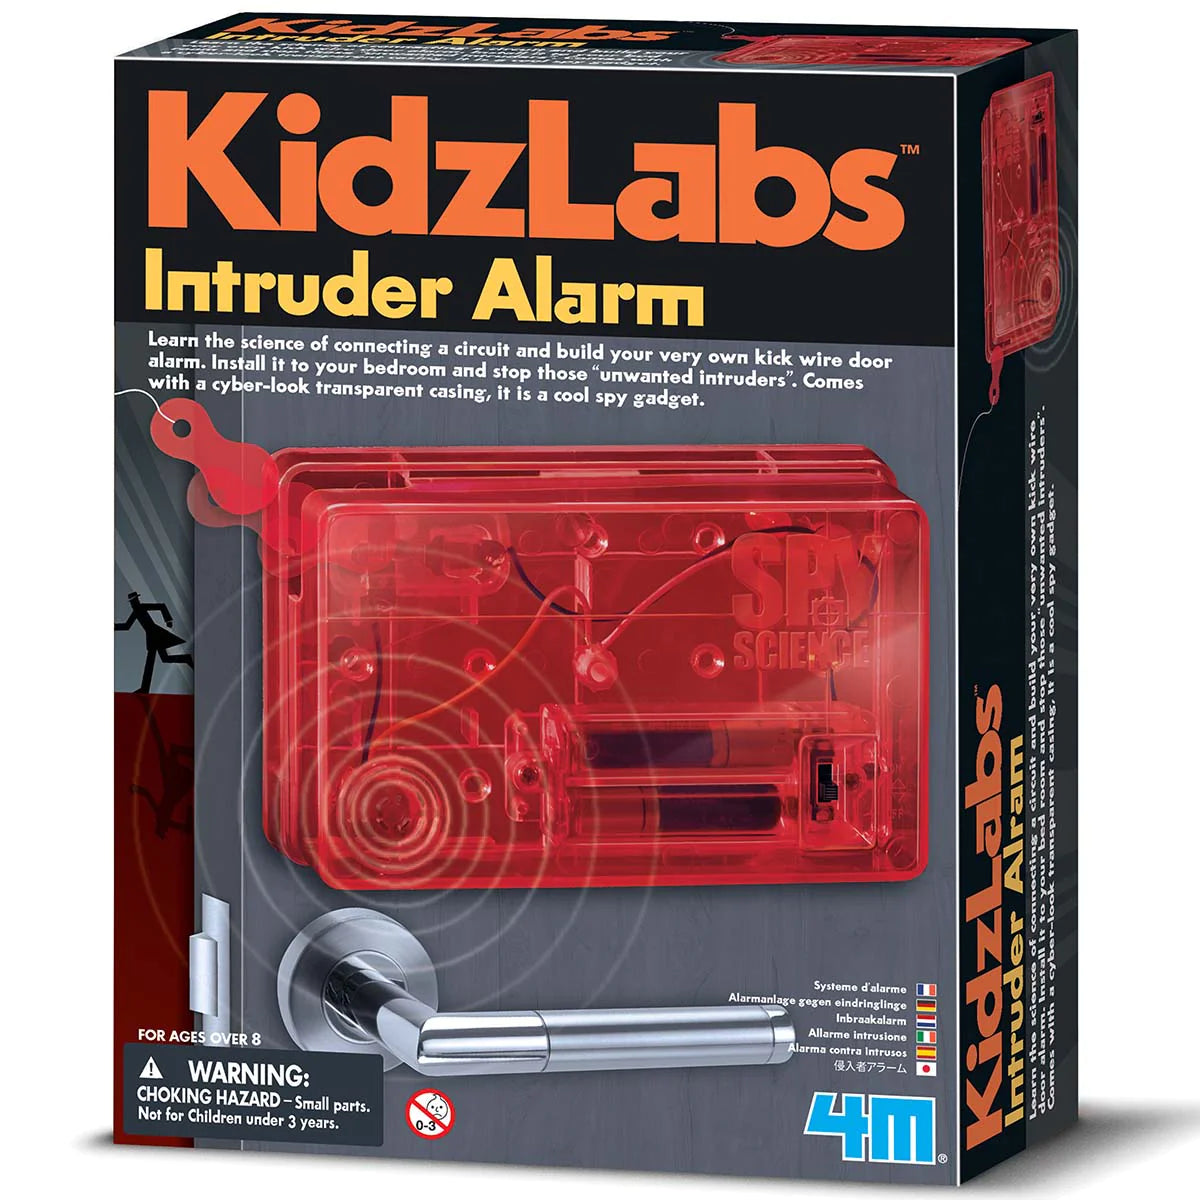 Kidzlabs Intruder Alarm